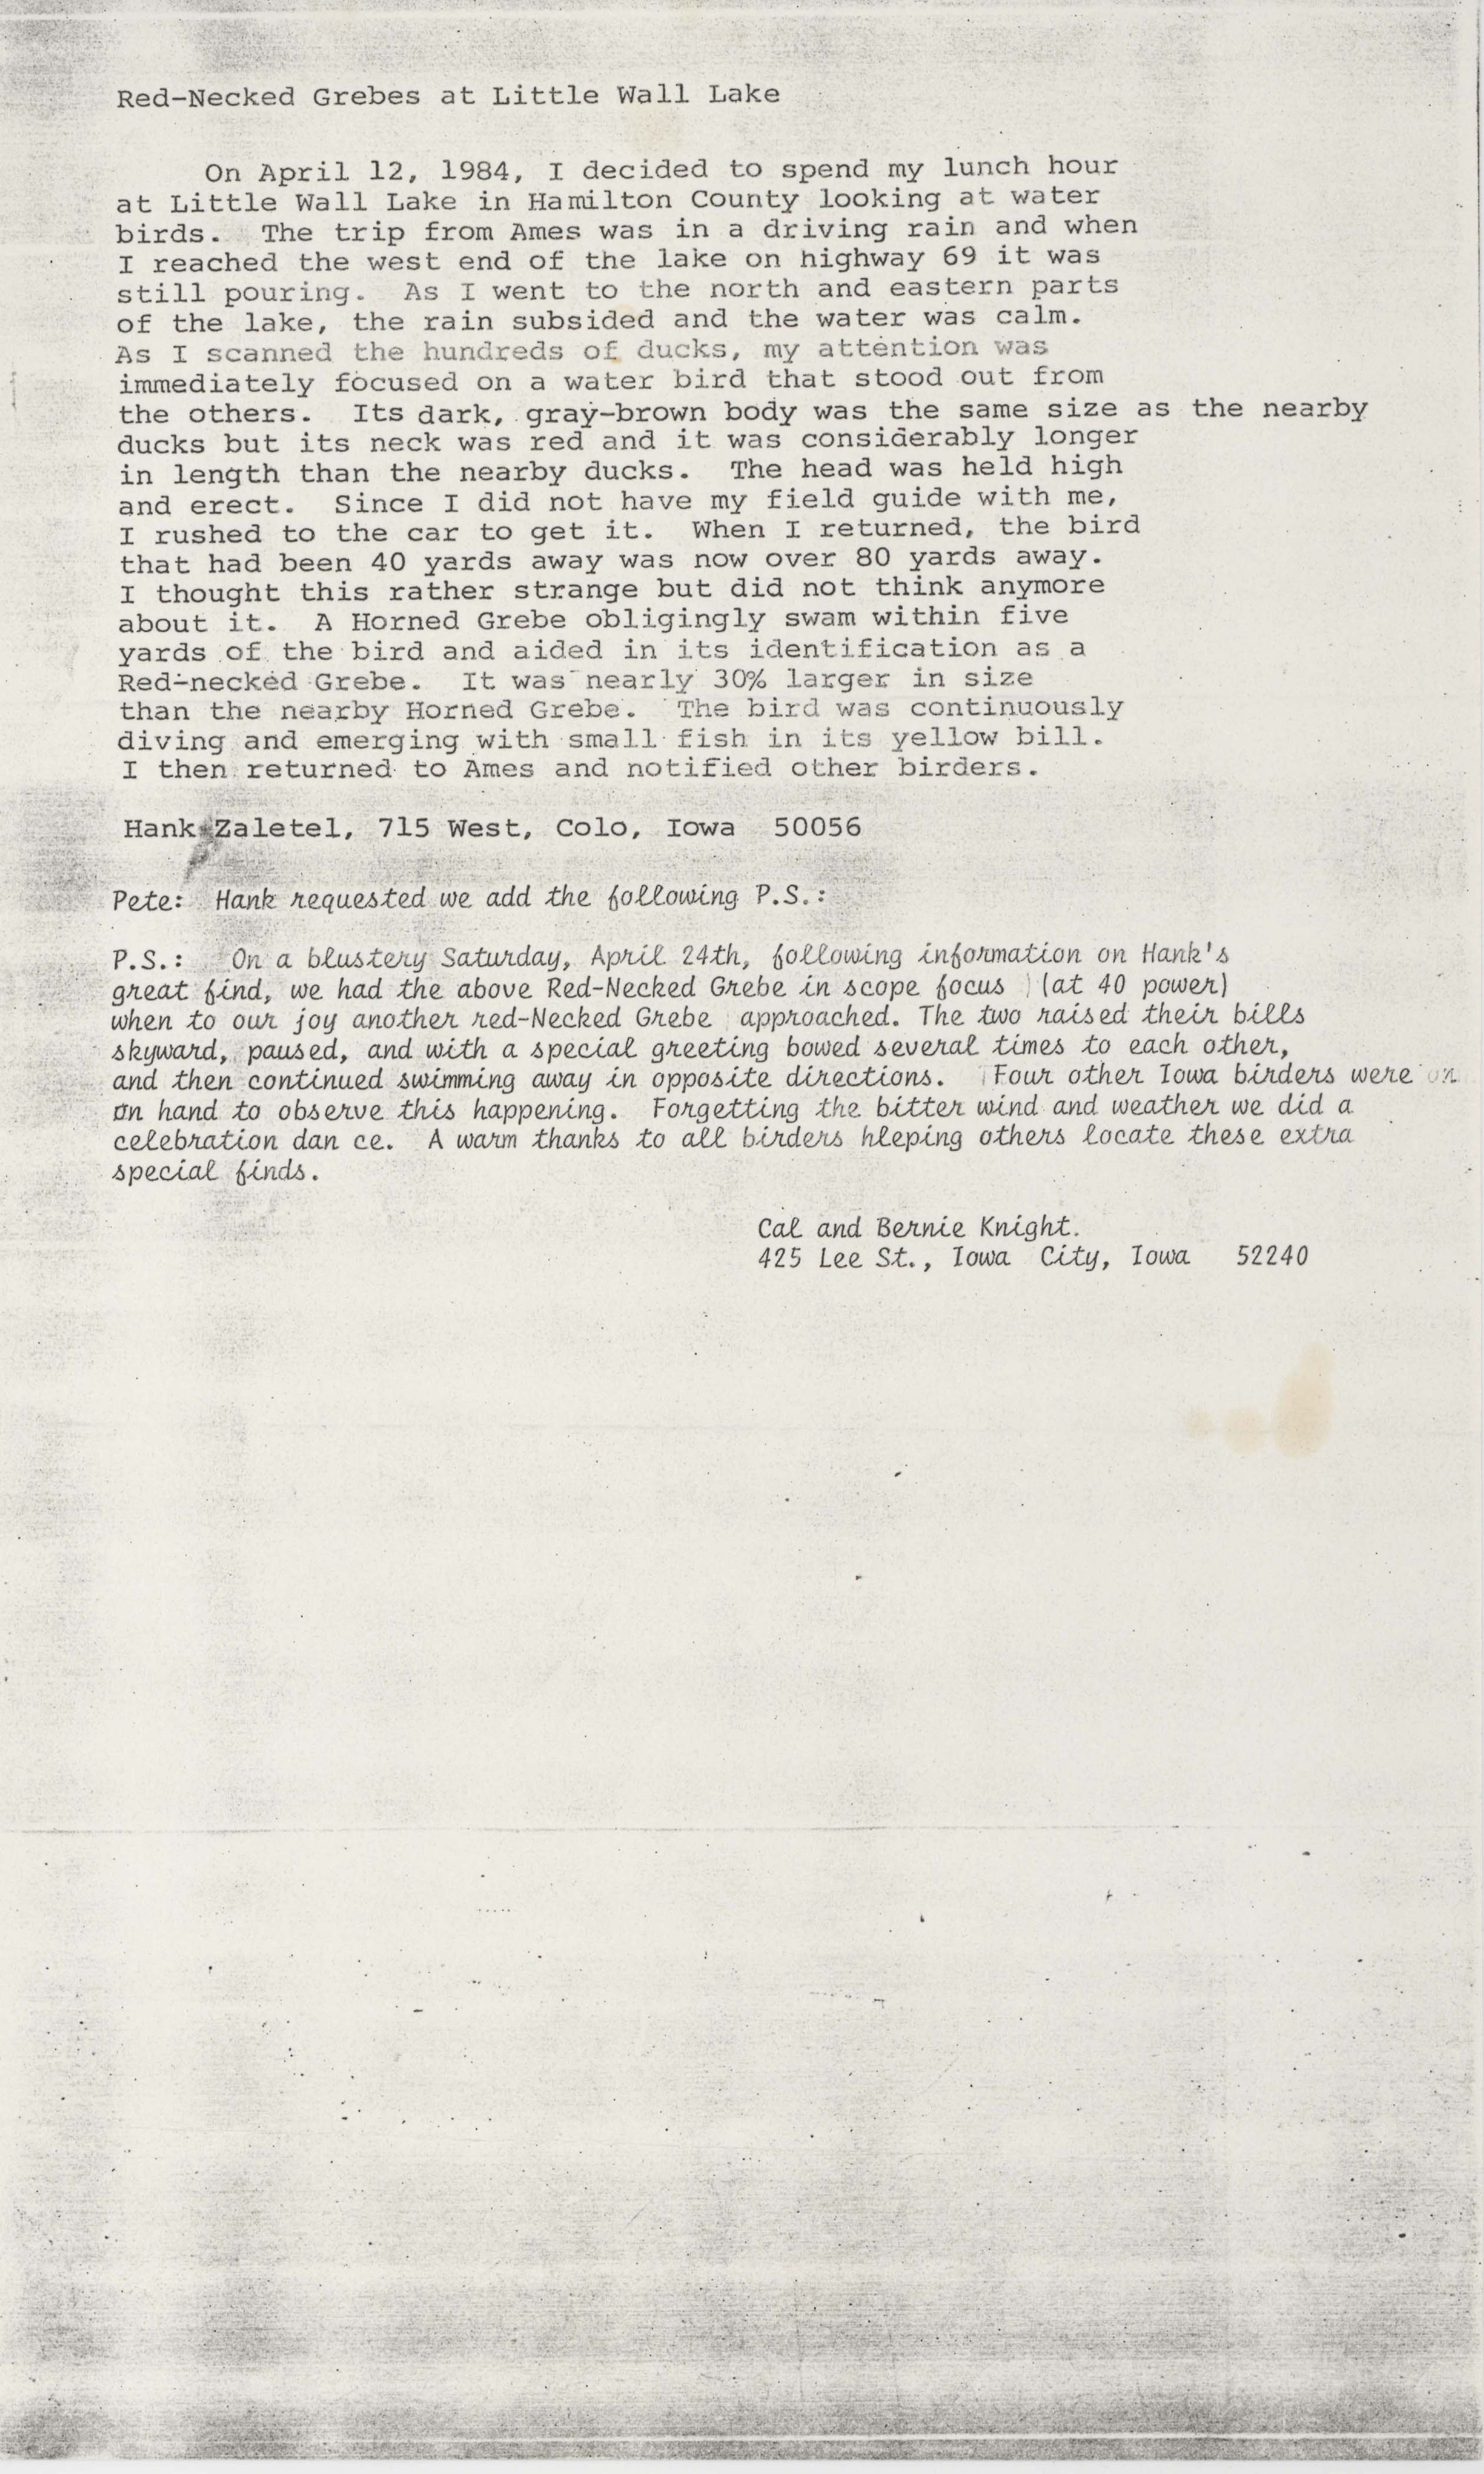 Hank Zaletel letter regarding Red-necked Grebes at Little Wall Lake